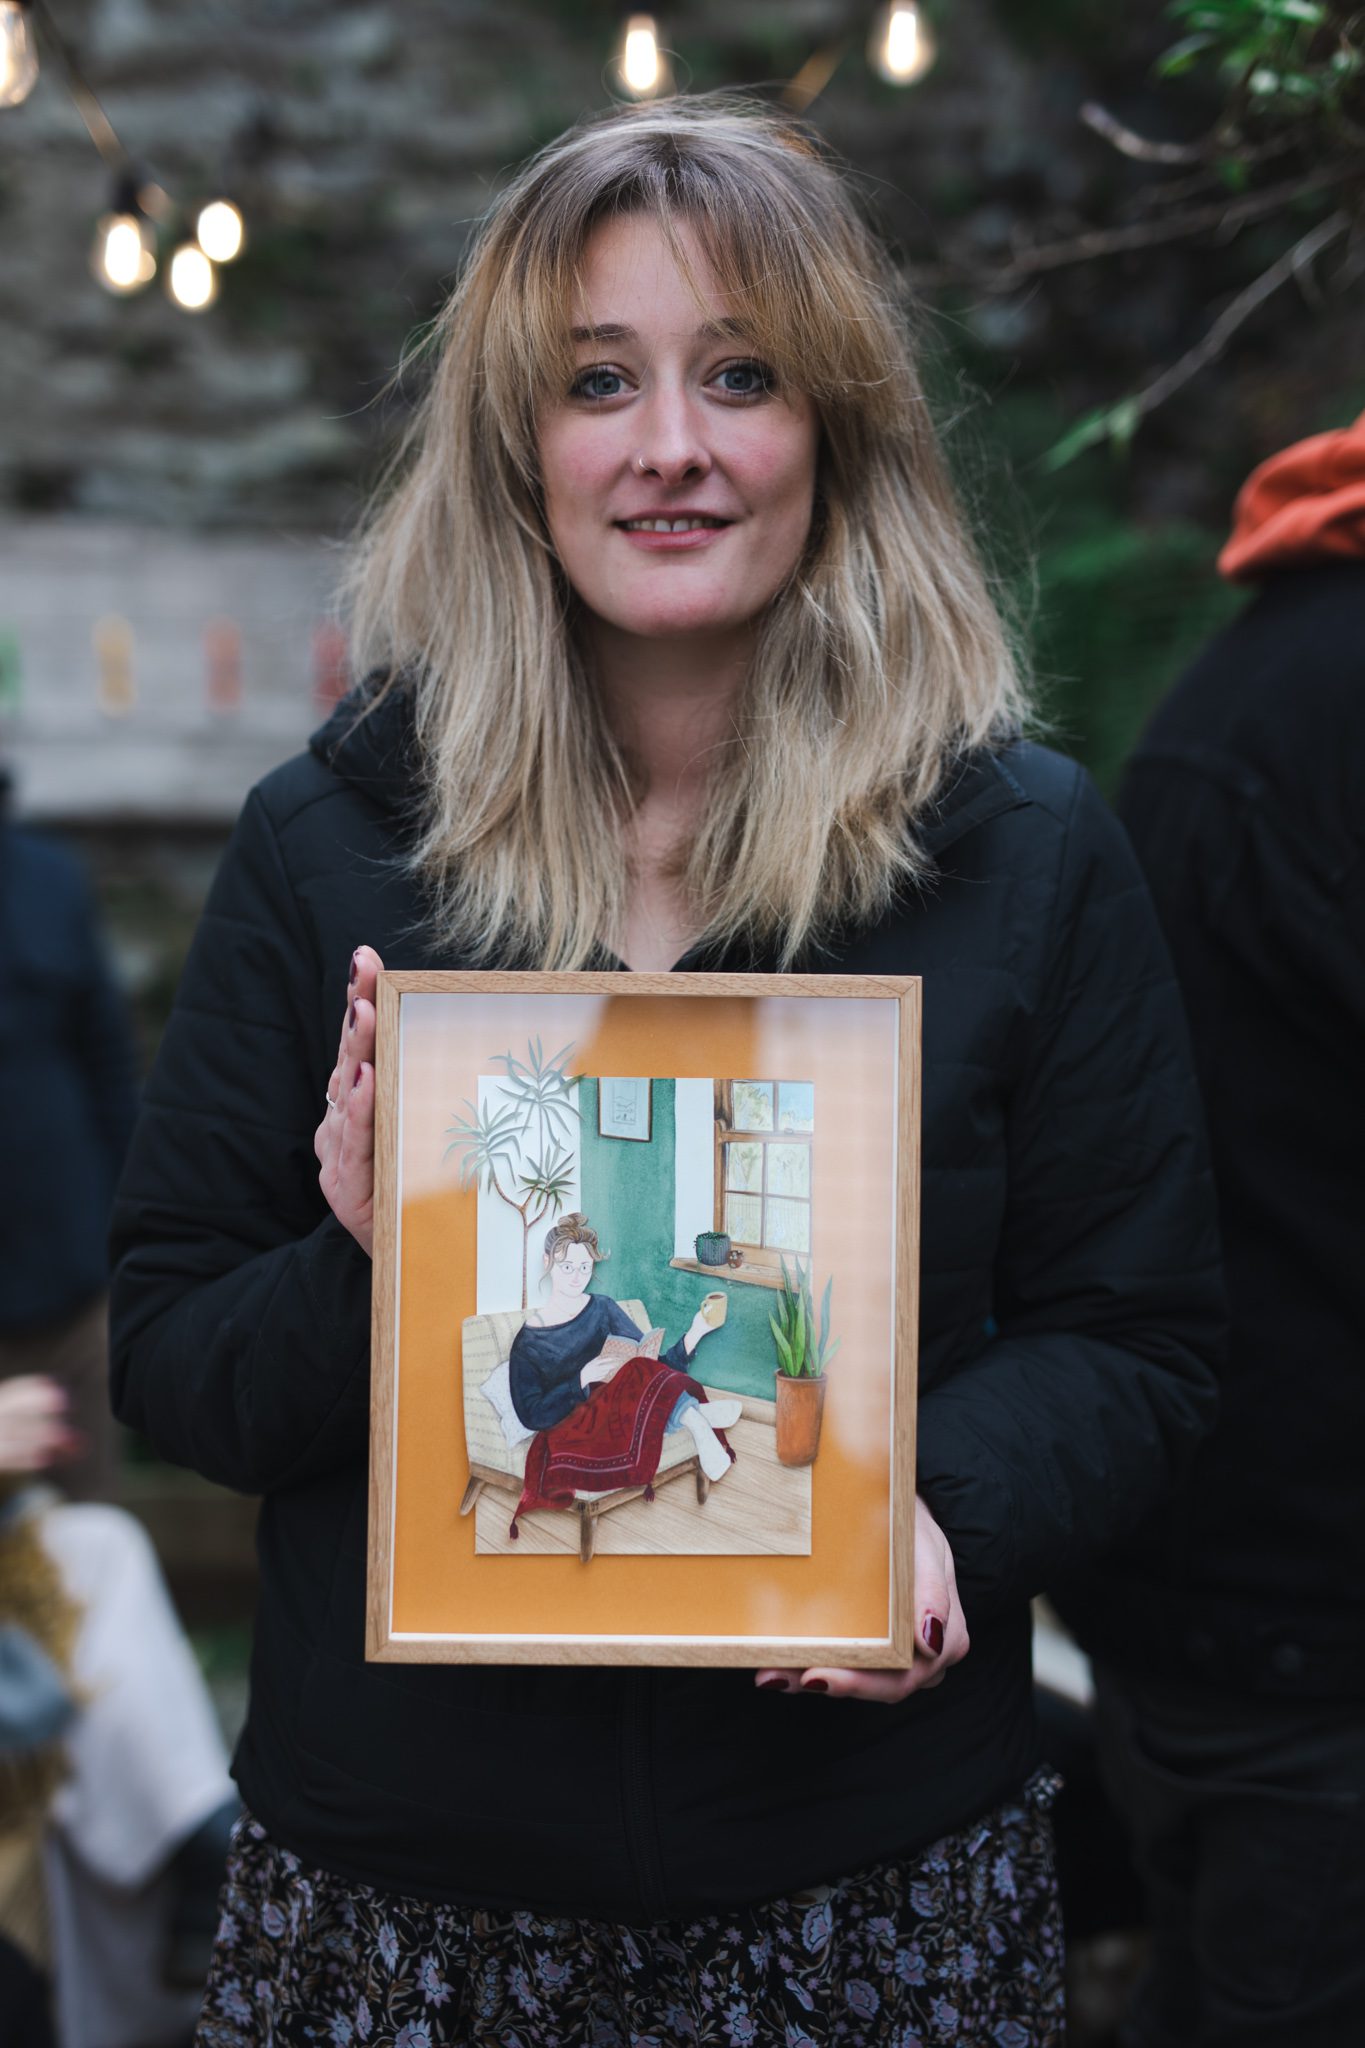 Tilly holding portrait by artist Bex Bourne